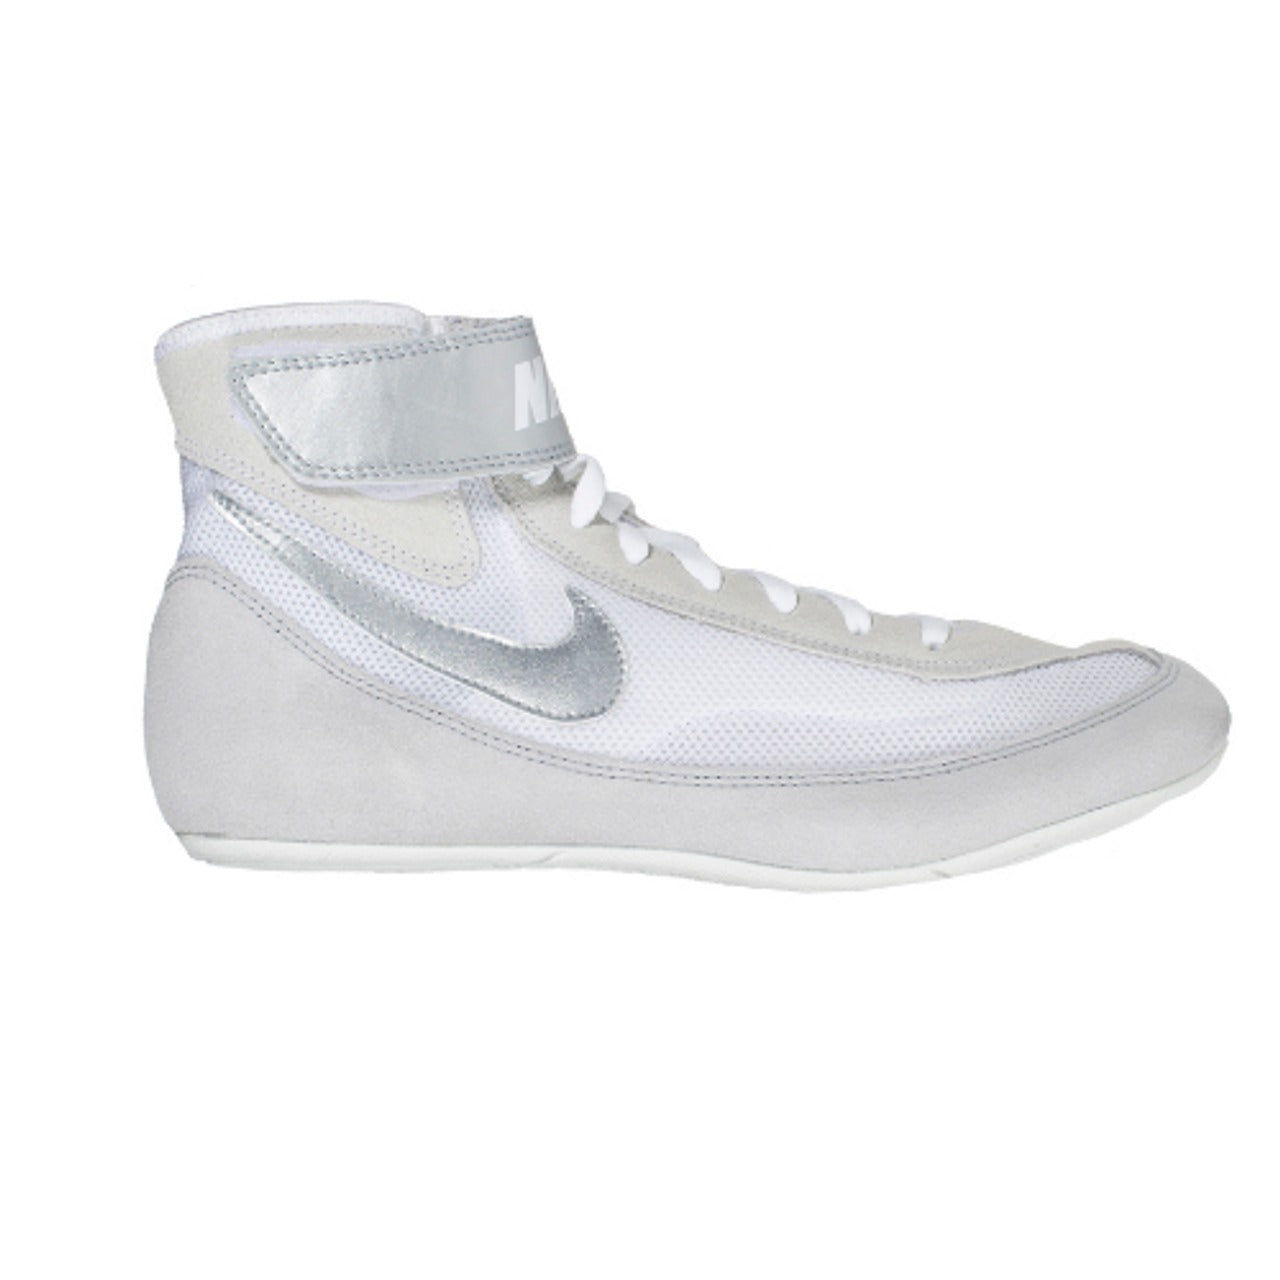 Chaussures De Lutte Speedsweep Vii Nike - Blanc/Argent